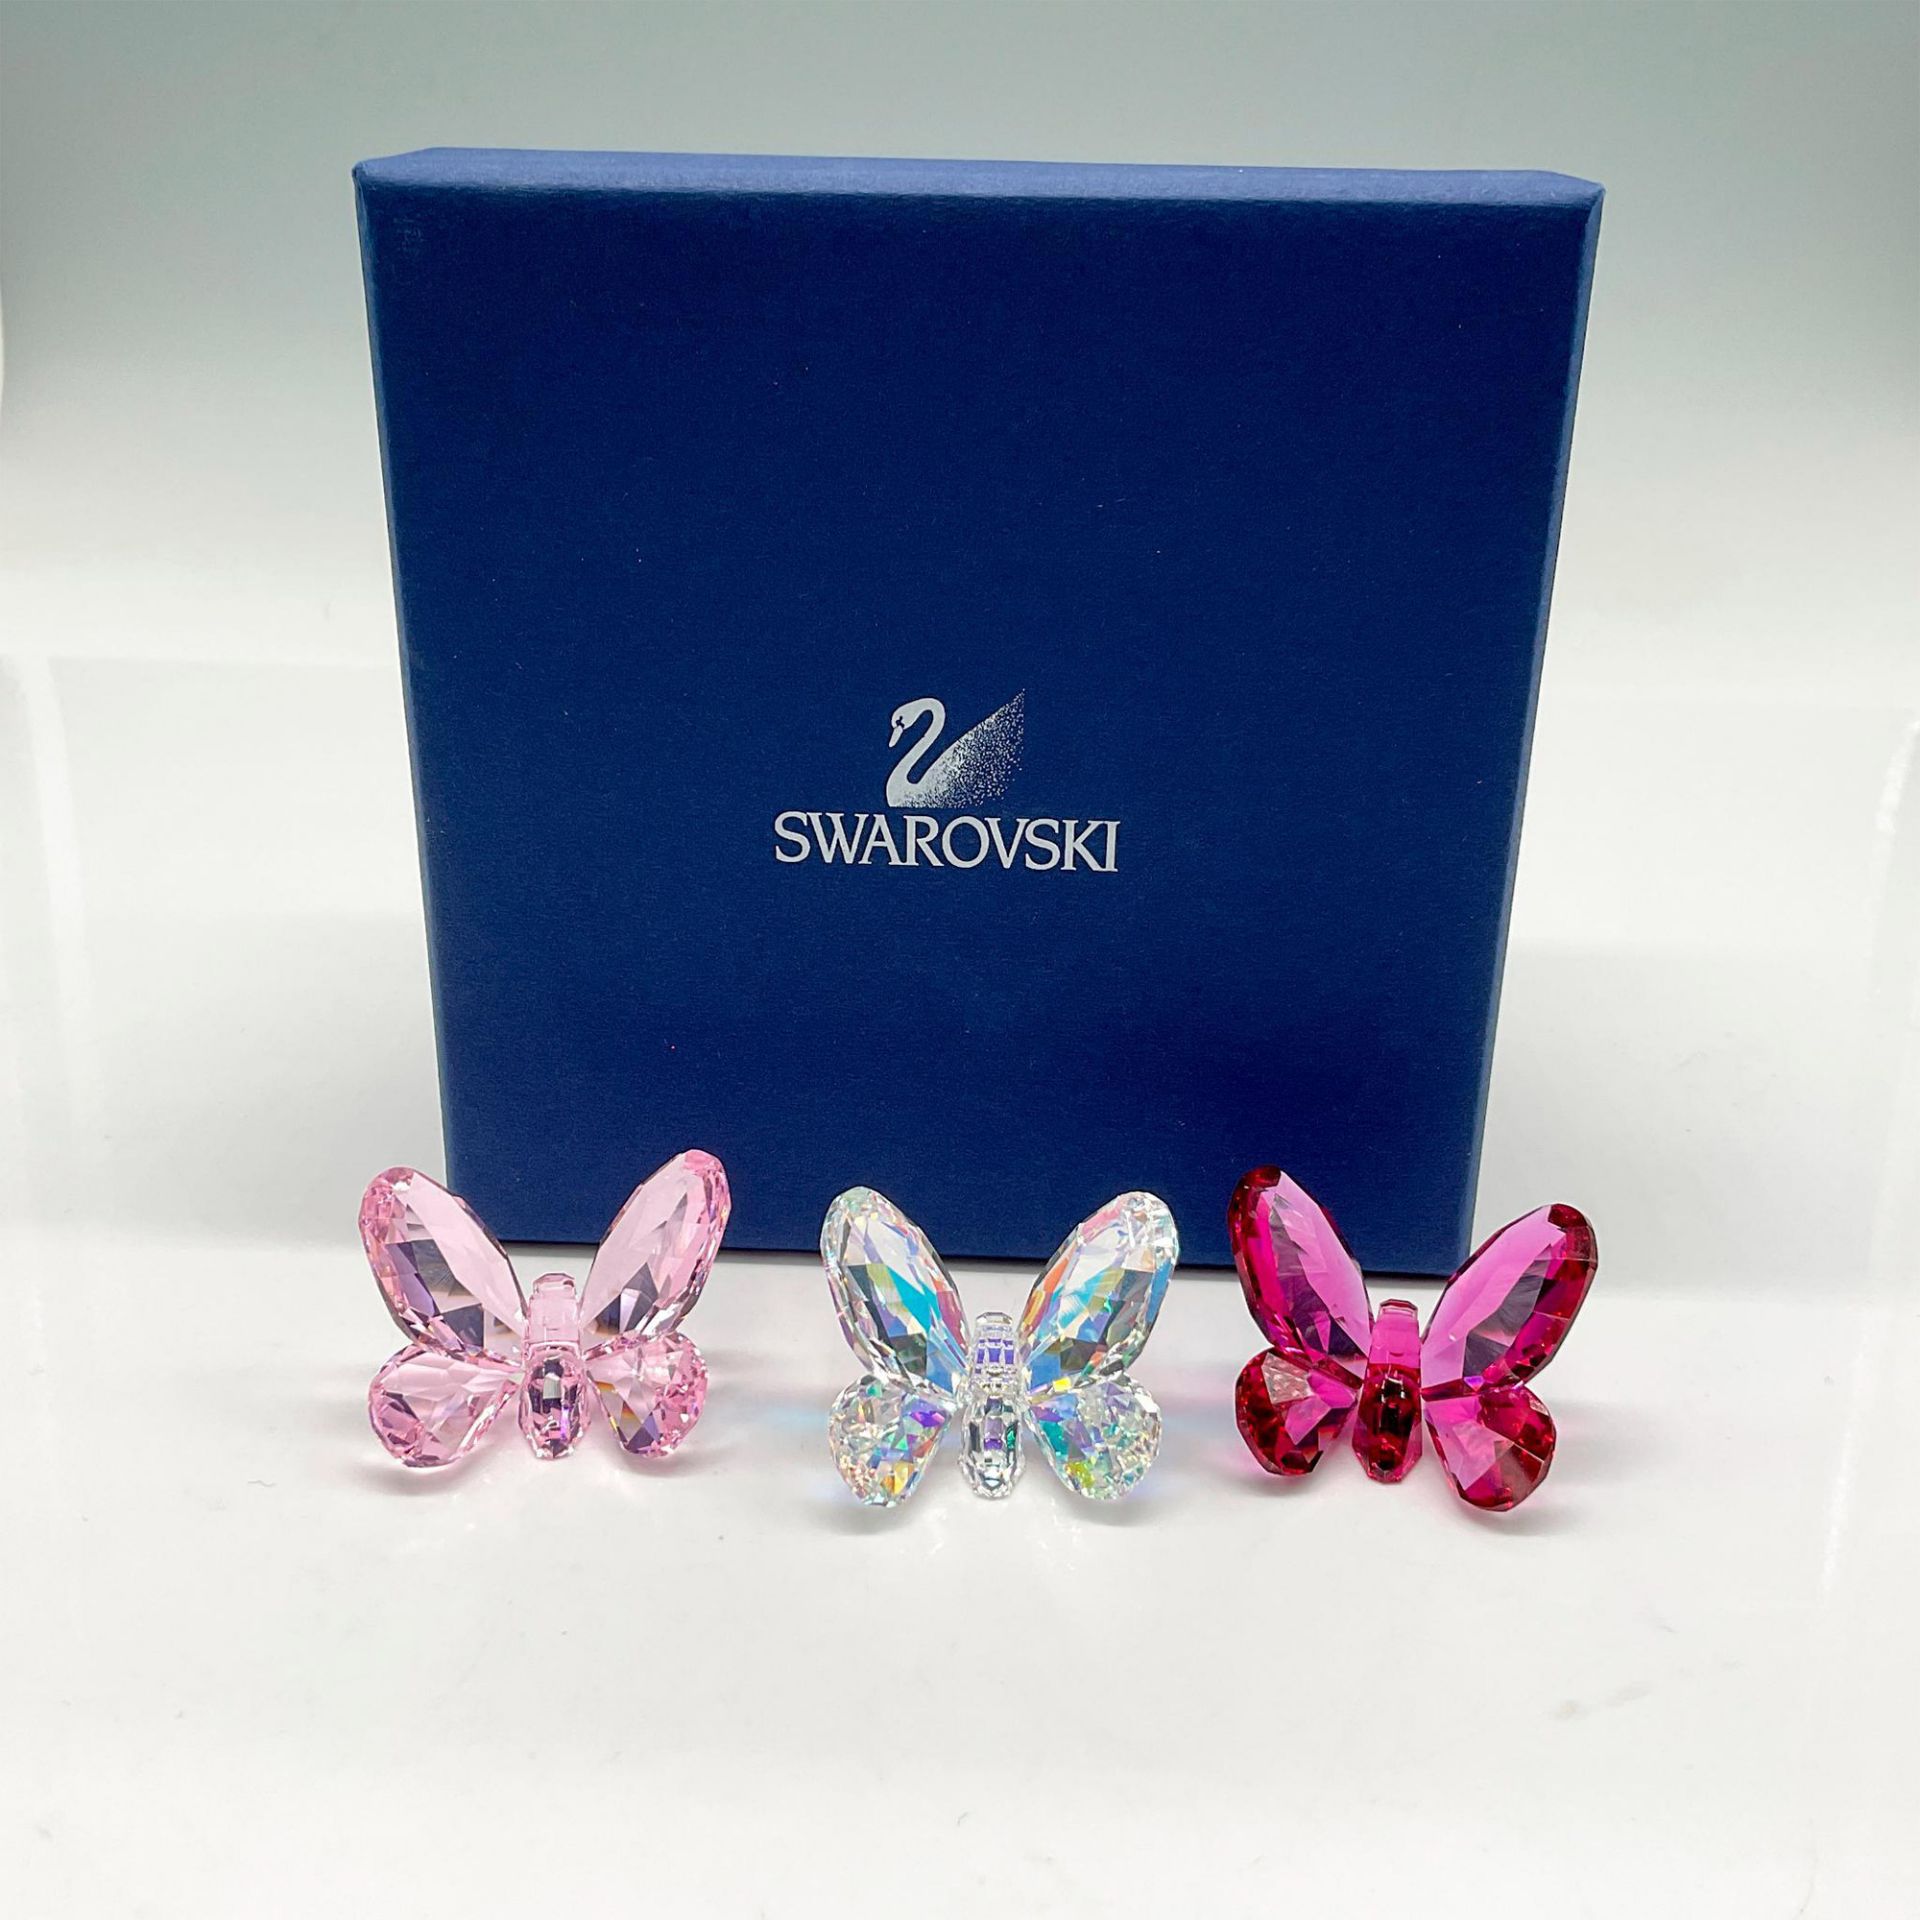 Swarovski Crystal Figurines, Set of 3 Small Butterflies - Image 4 of 4